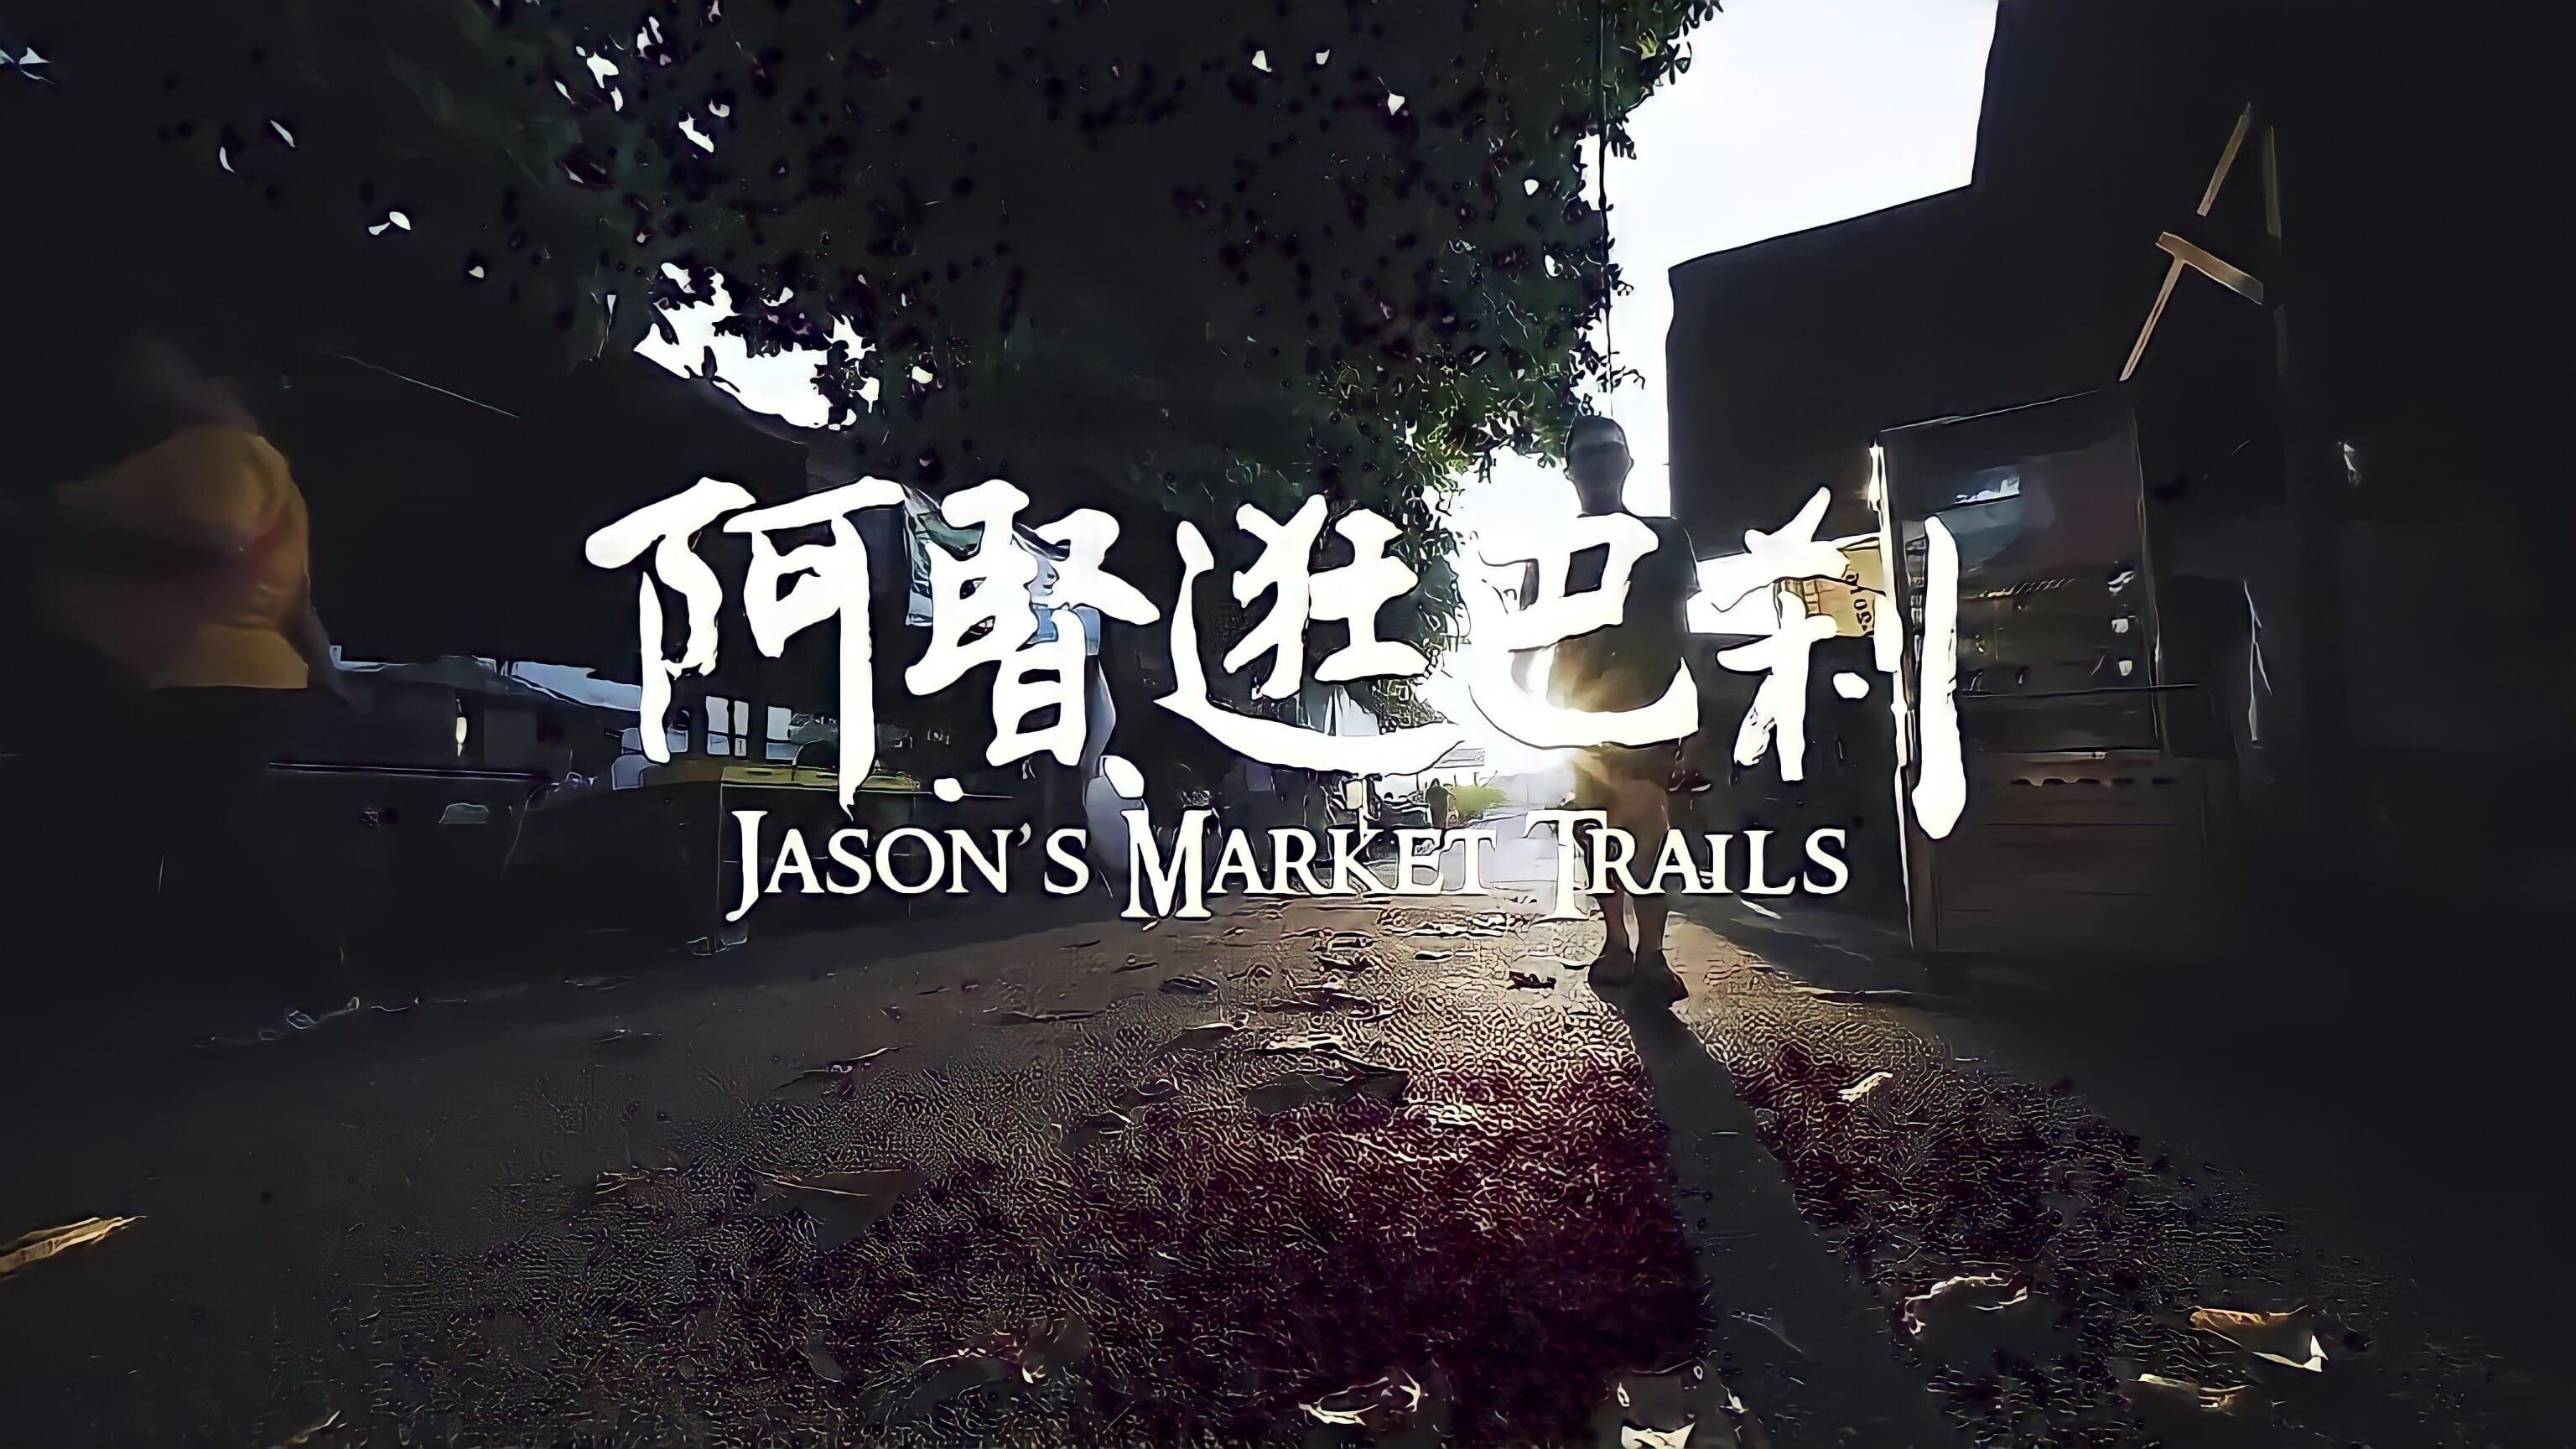 Jason's Market Trials backdrop